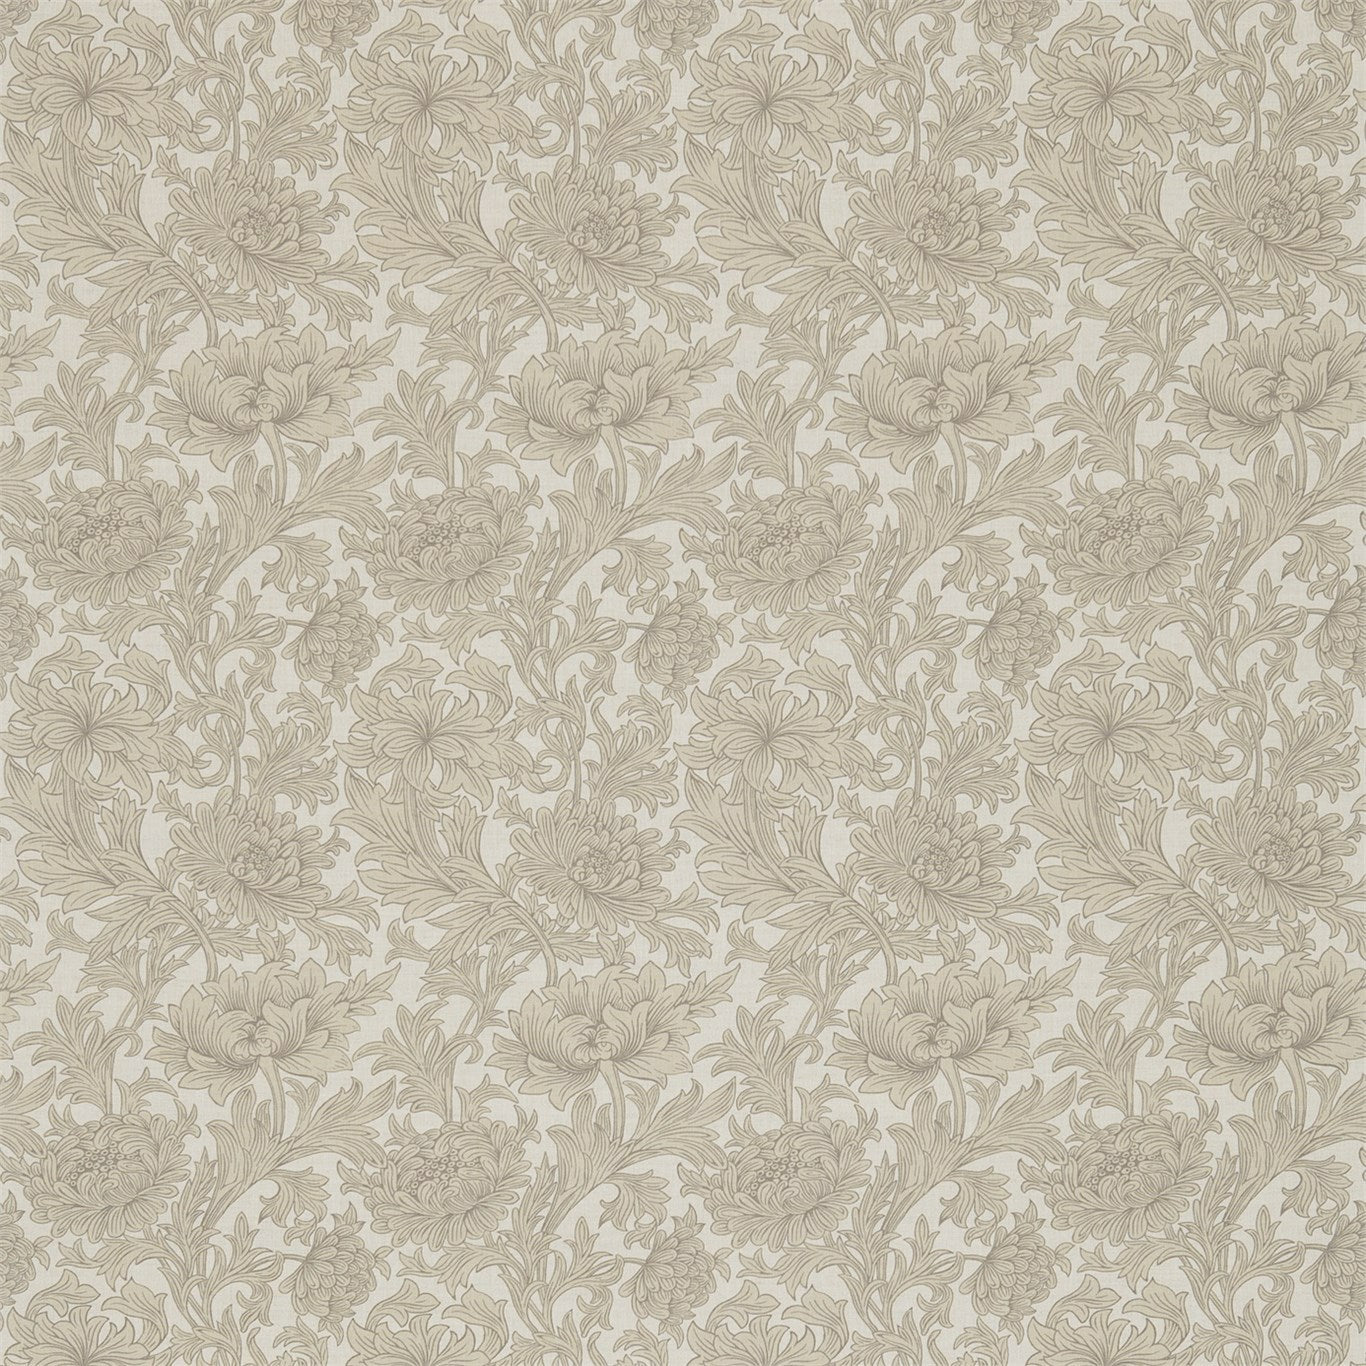 Chrysanthemum Toile Fabric by Morris & Co. - DMCOCH204 - Sisal/Canvas